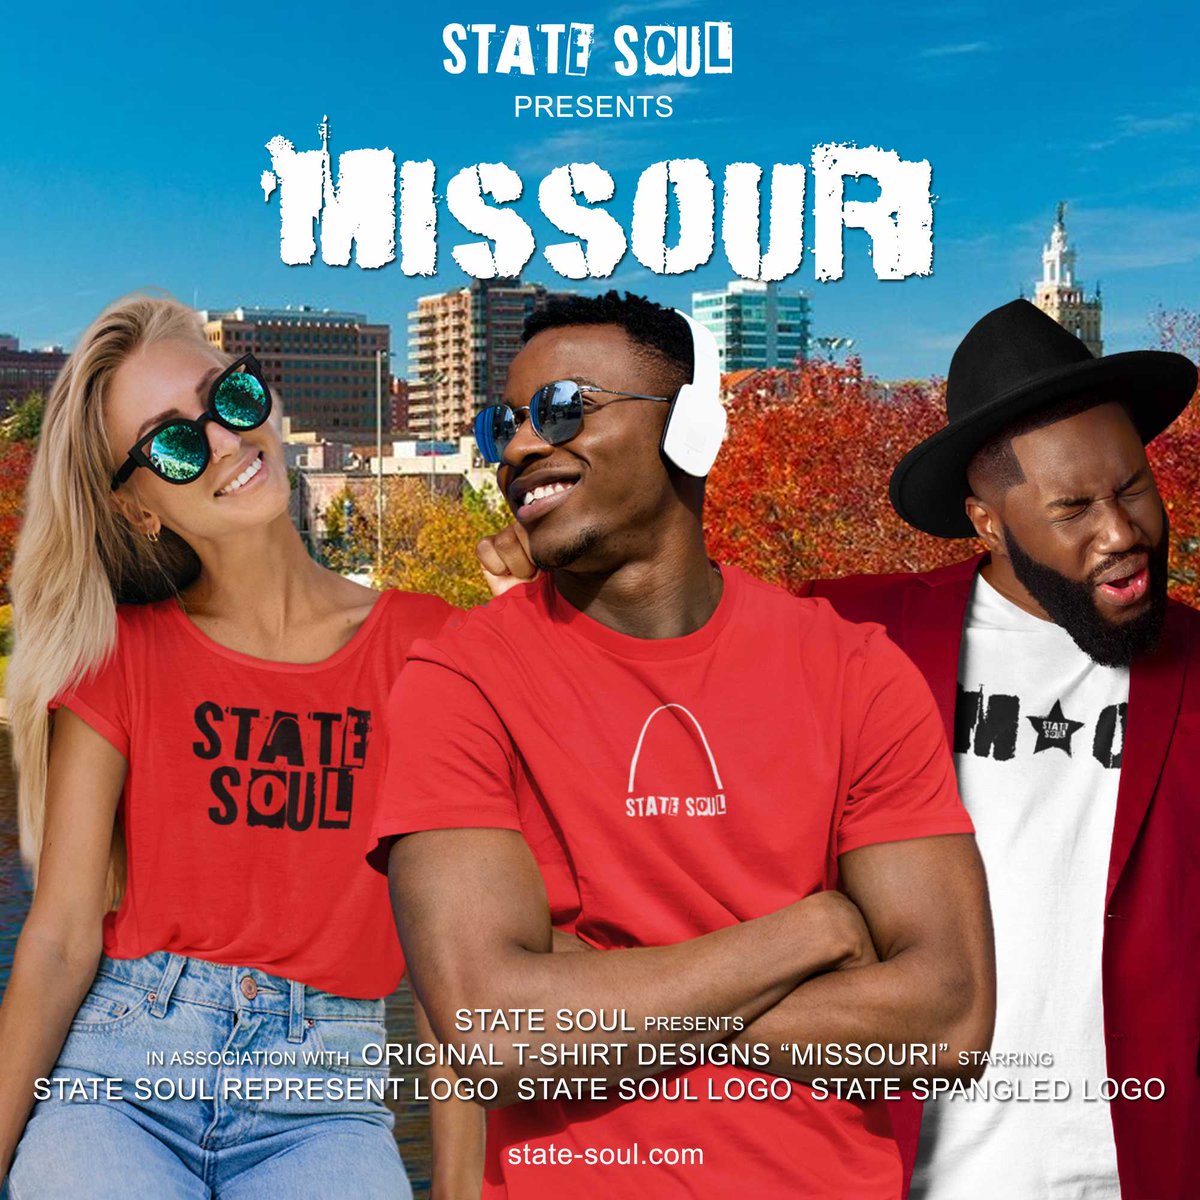 State Soul.... wear everywhere. Worldwide Shipping. state-soul.com
#tshirt #tshirts #tshirtdesign #tshirtshop #tshirtlife #tshirtlovers #tshirtstore #tshirtsale #tshirtdesigner #tshirtstyle #Missouri #missouricity #missourilife #missouricitytx #MissouriState